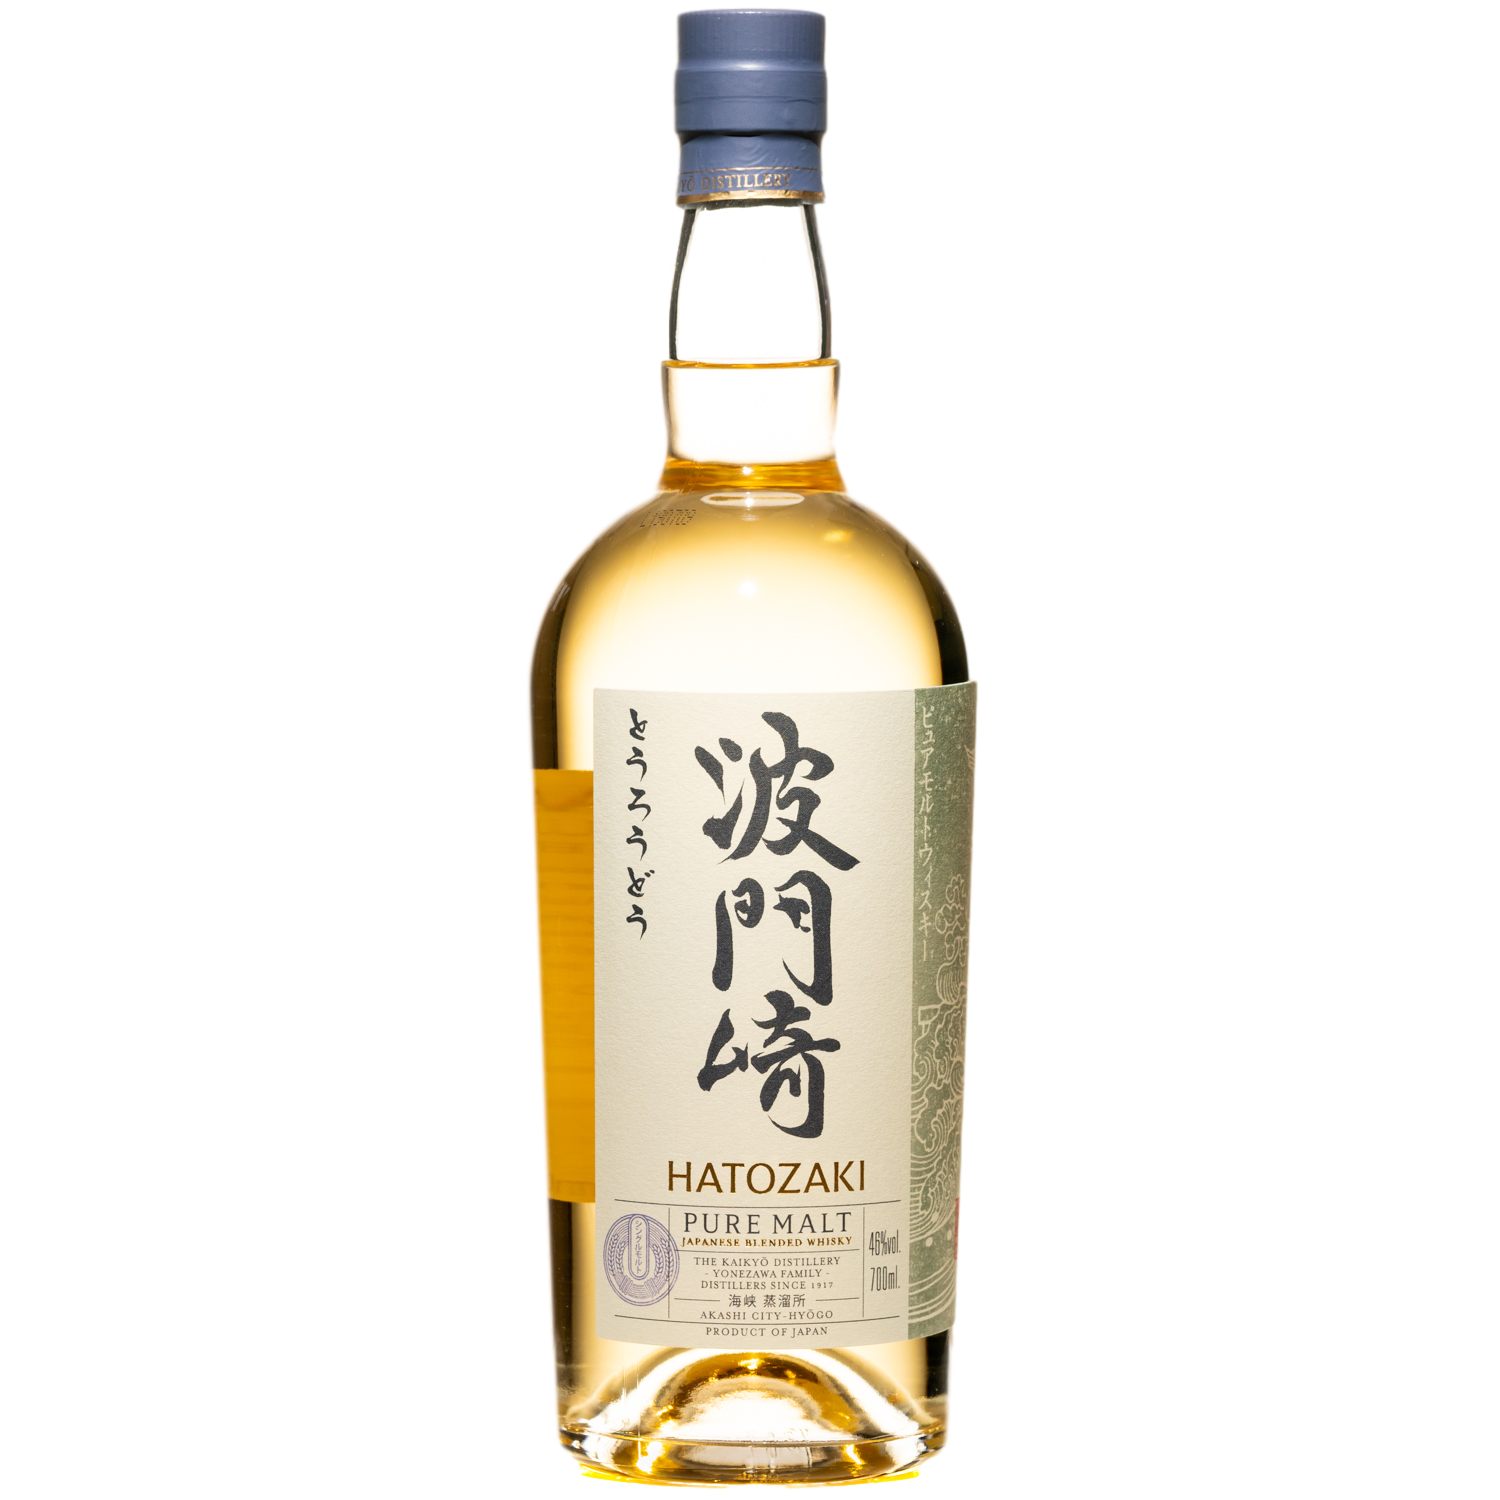 Hatozaki Pure Malt Whisky - Japanese Blended Malt - Barrel Brothers